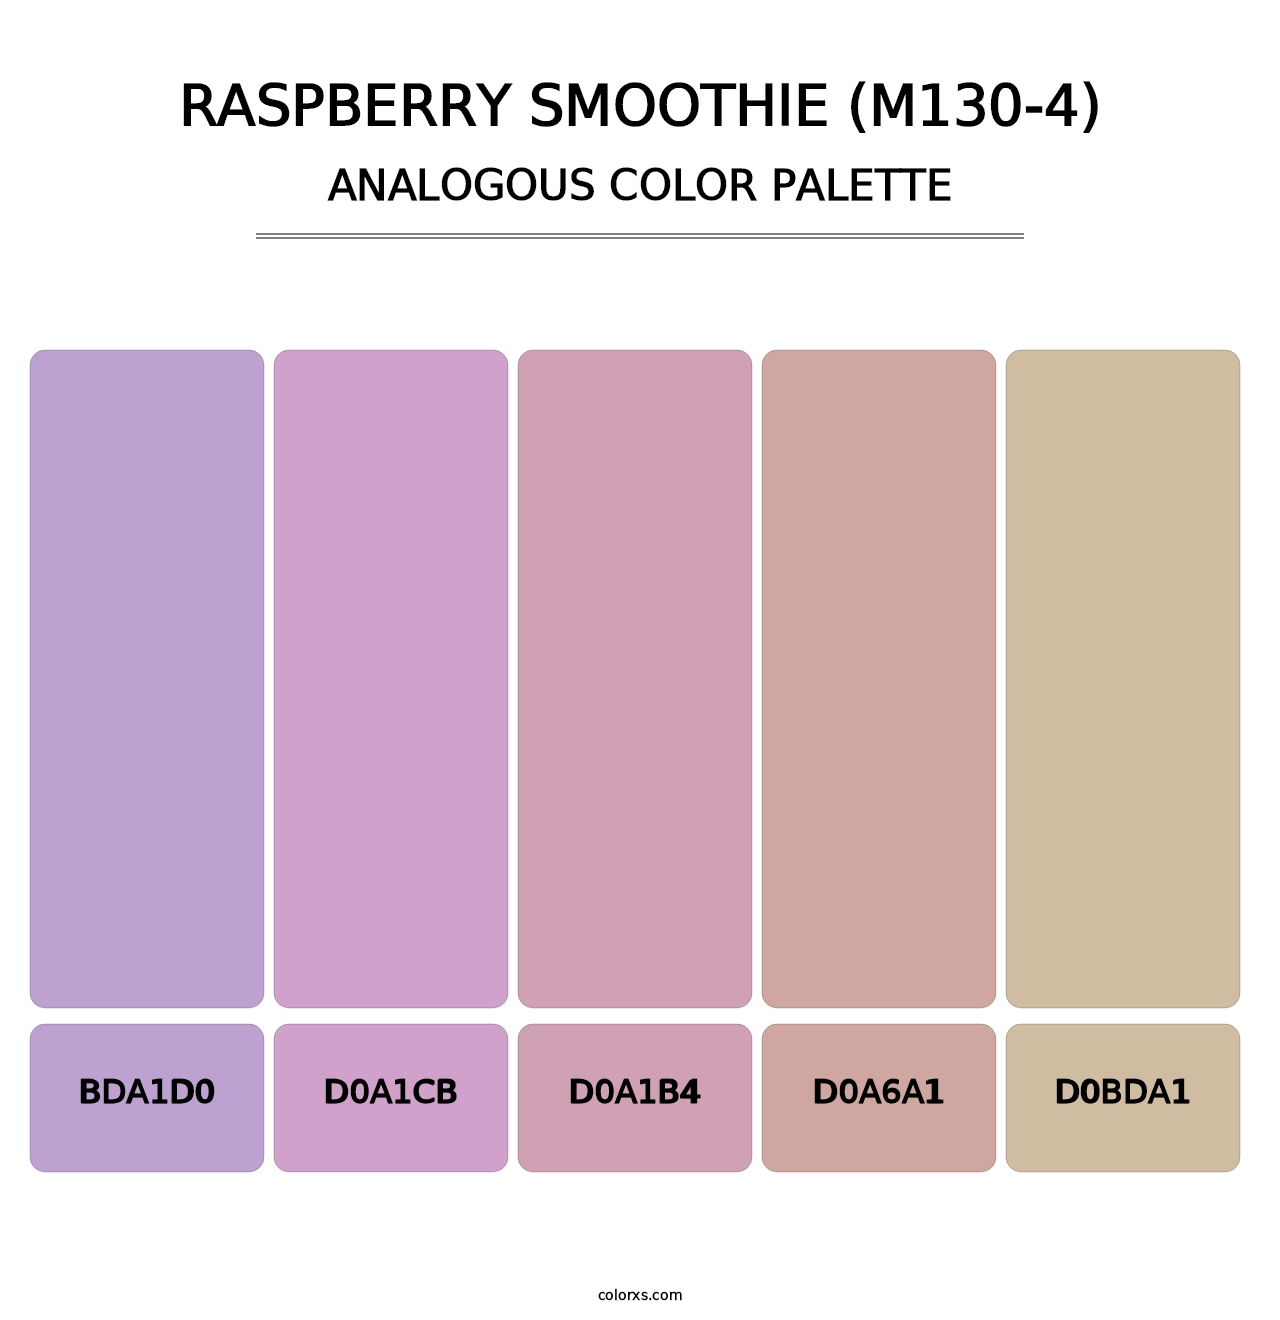 Raspberry Smoothie (M130-4) - Analogous Color Palette